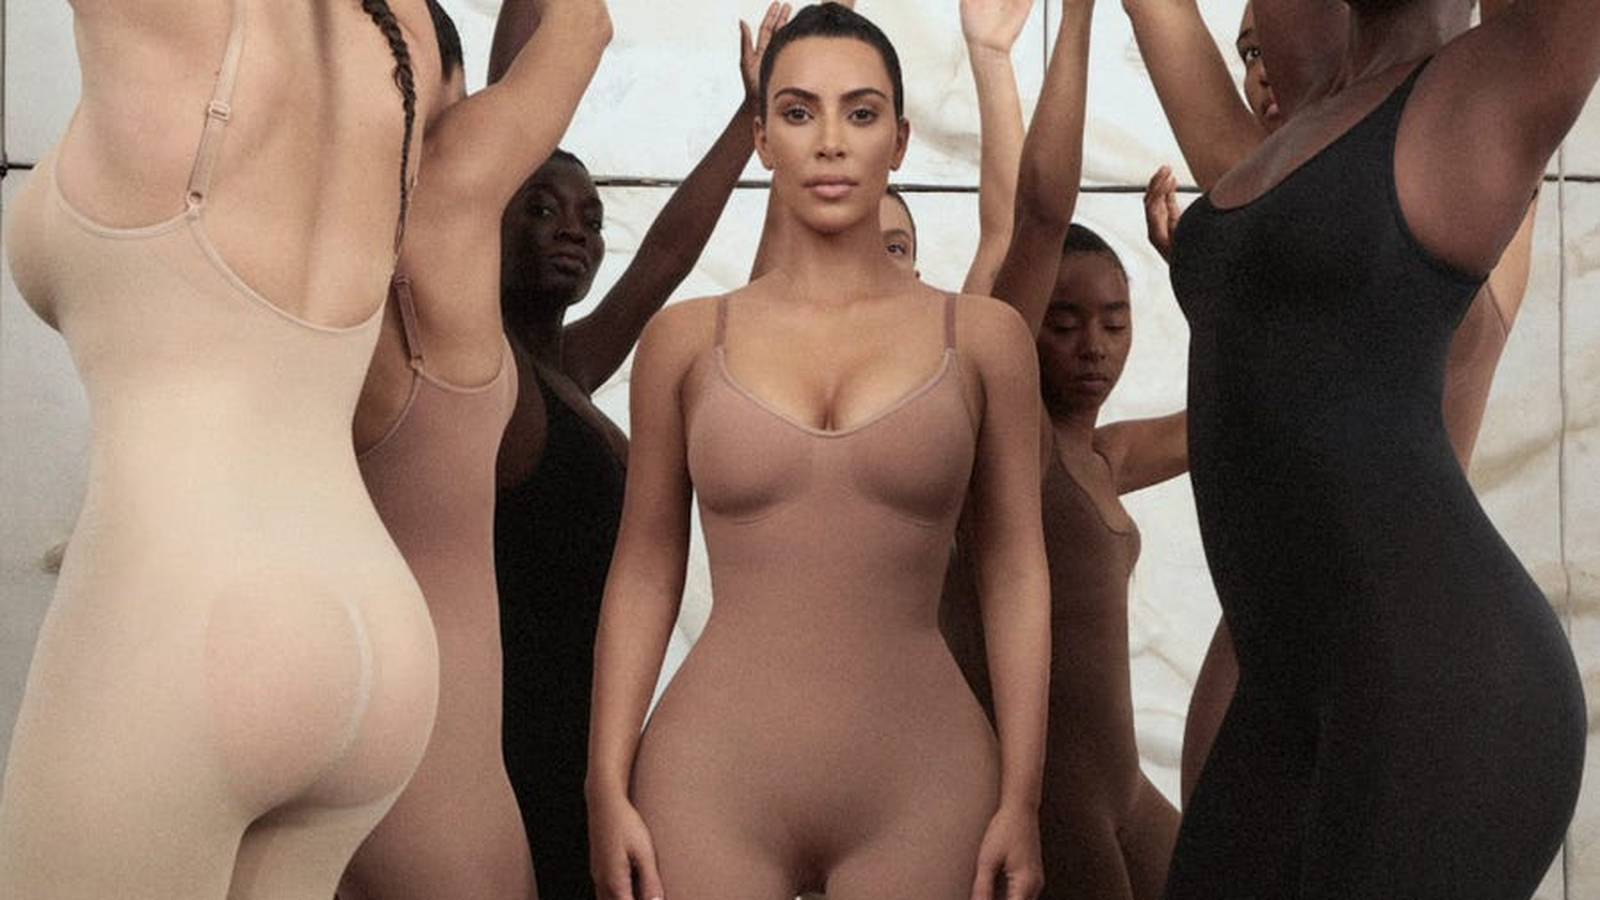 Kim Kardashian's SKIMS Cotton Collection Review: Teen Vogue Tries